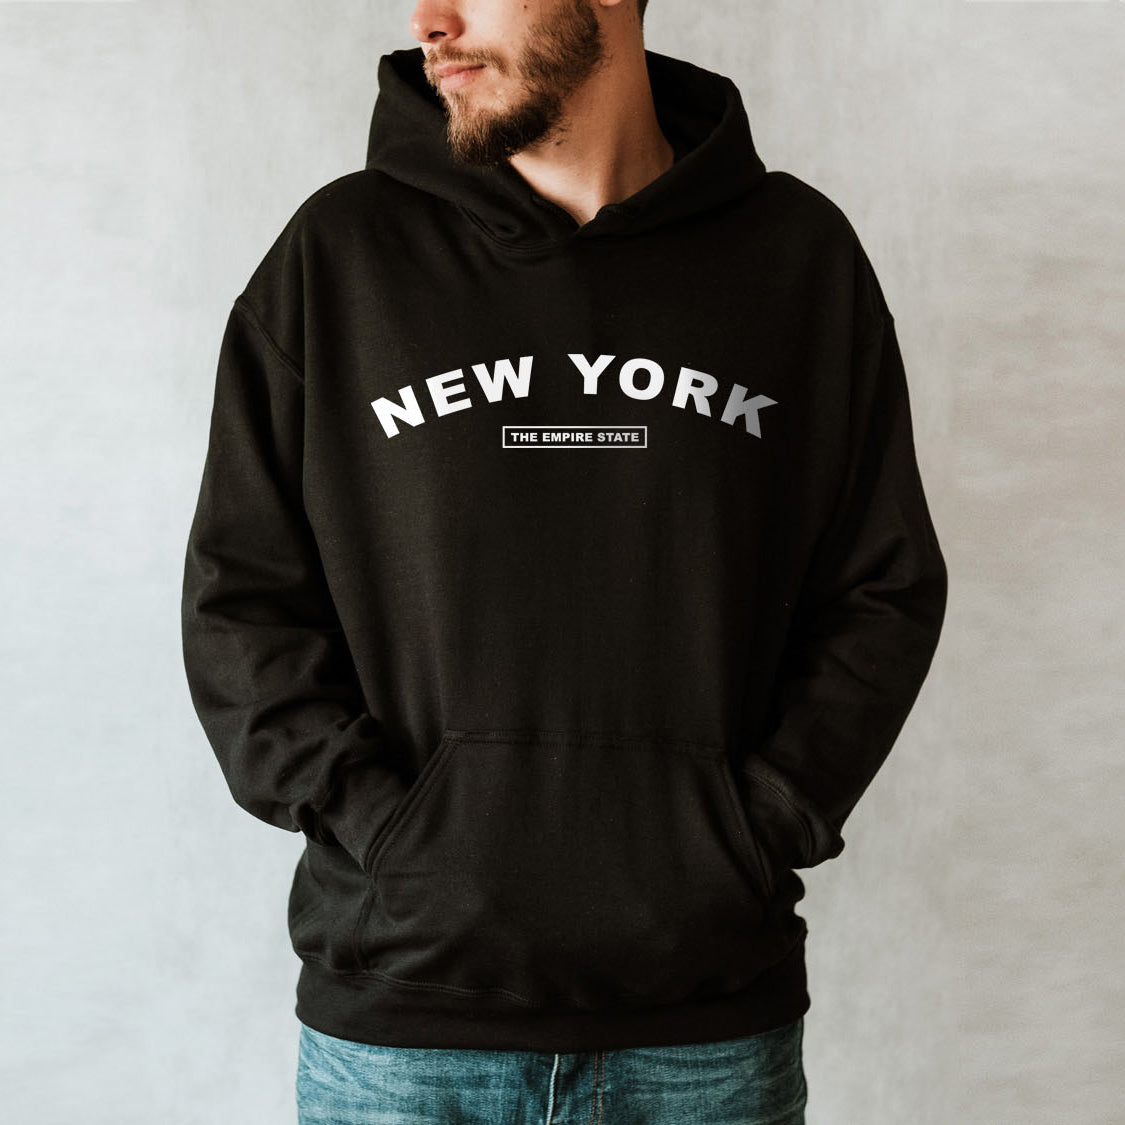 New York The Empire State Hoodie - United States Name & Slogan Minimal Design Printed Hoodie